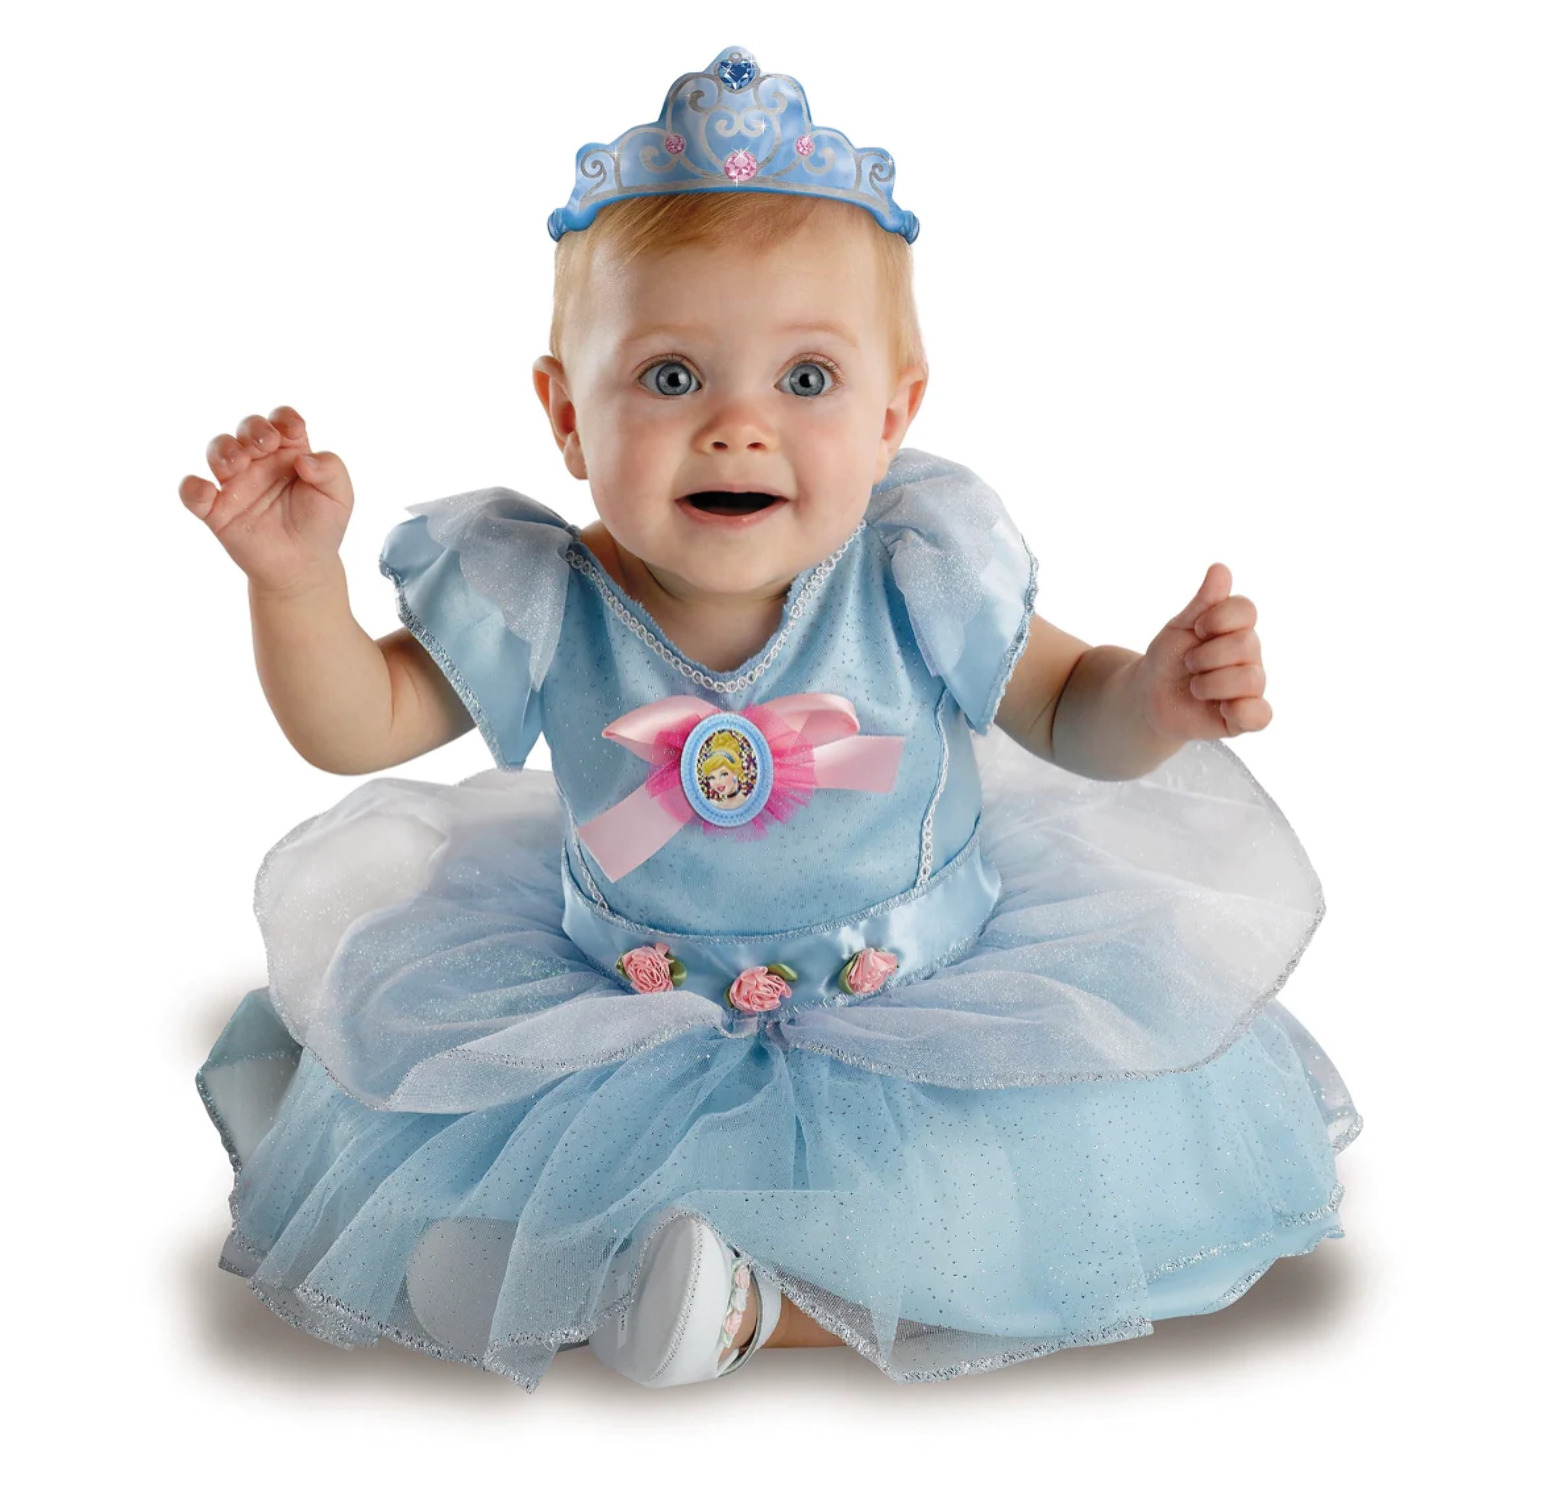 Cinderella Deluxe Toddler Halloween Costume with Headpiece - image 2 of 2